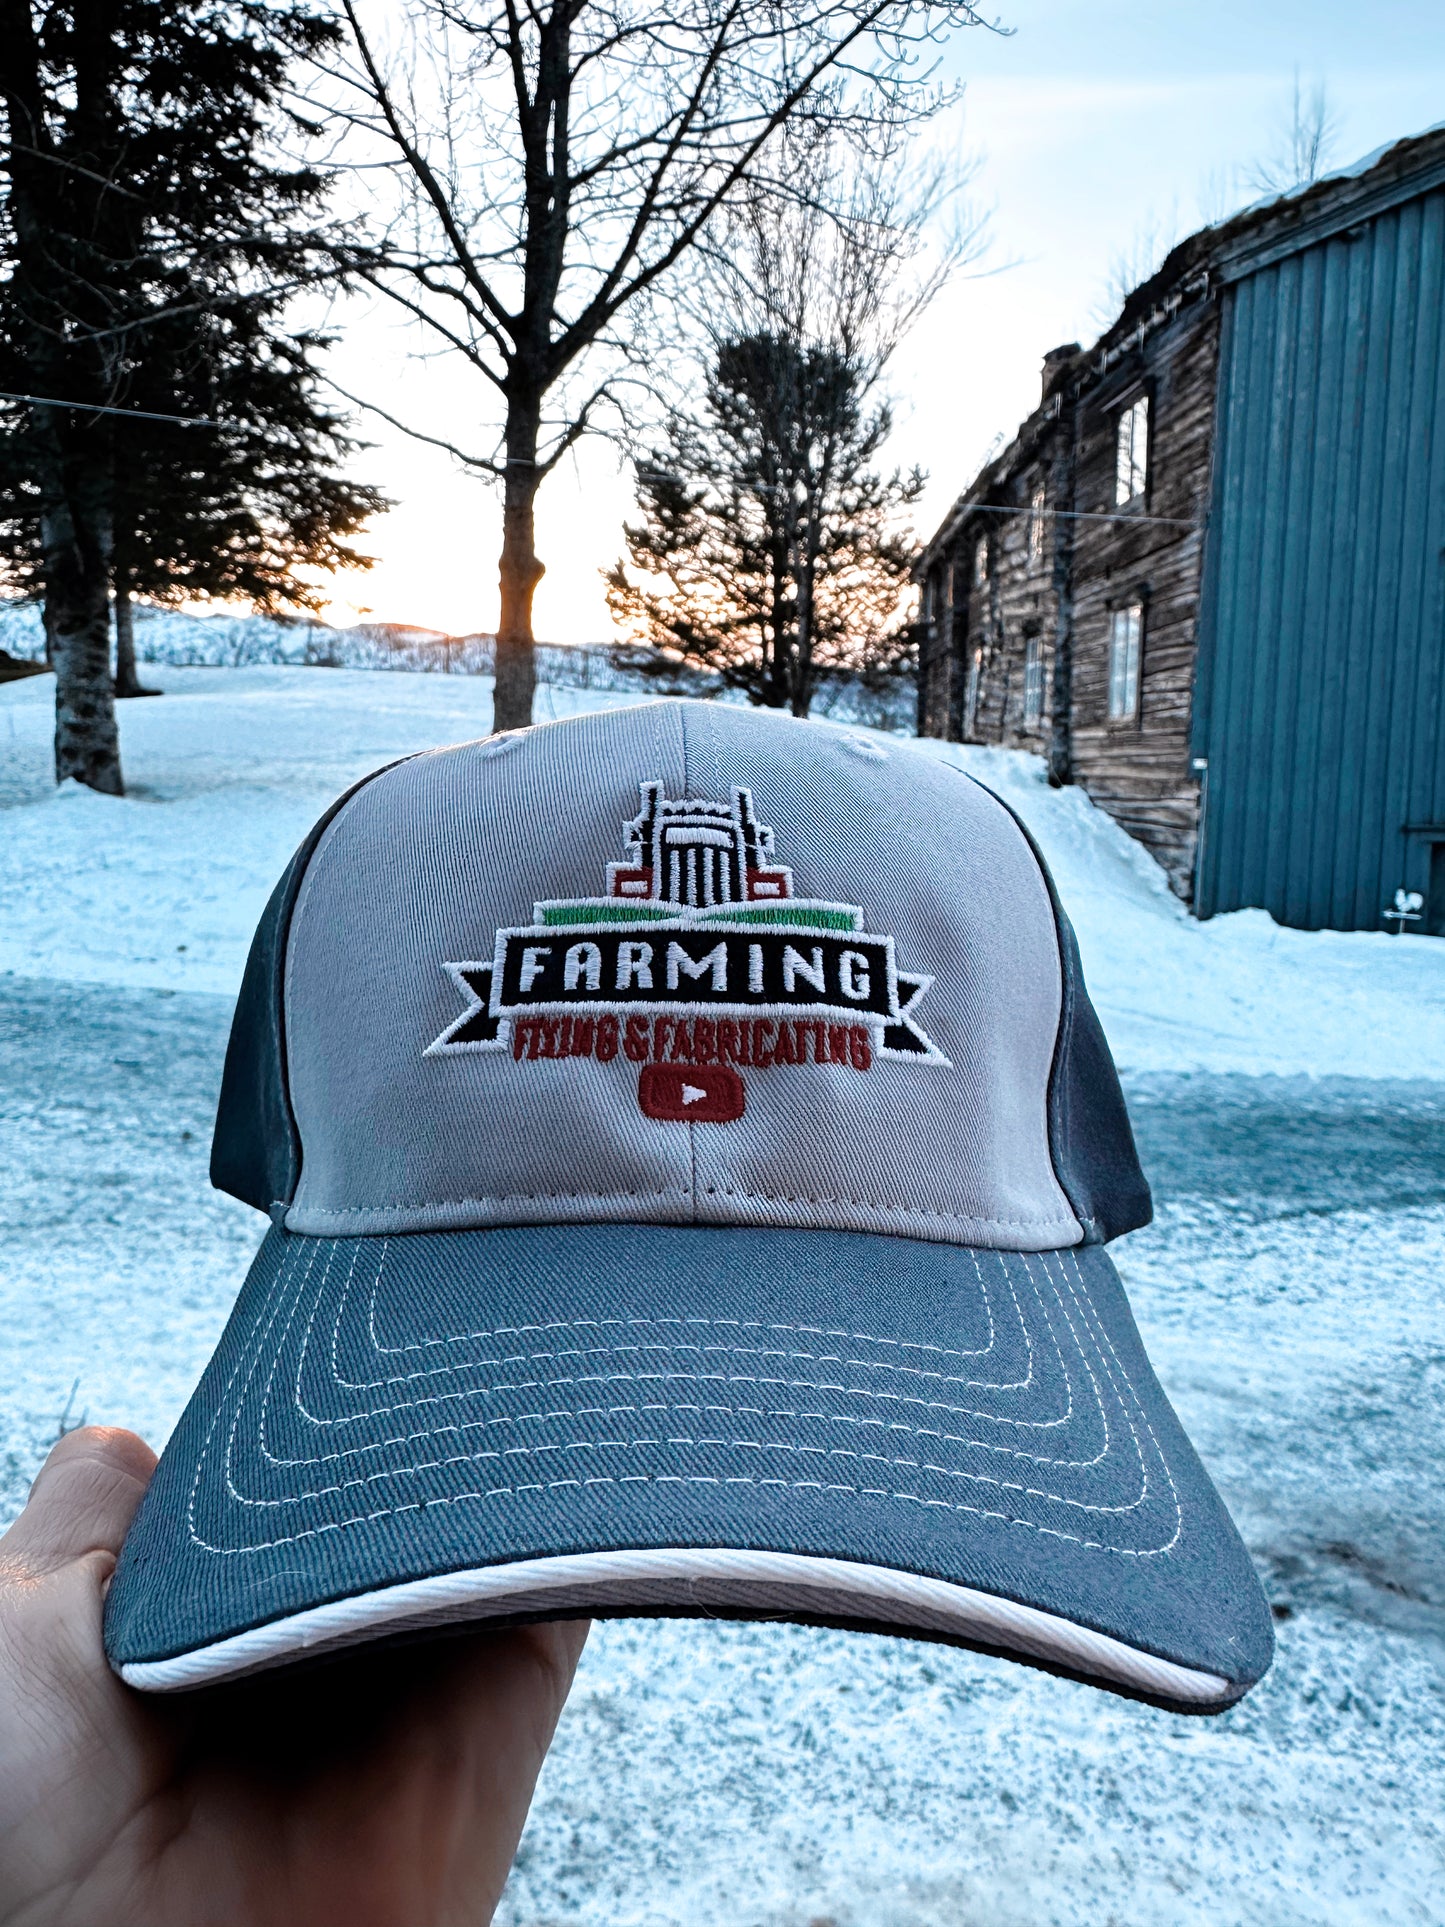 Farming Fixing & Fabricating hat